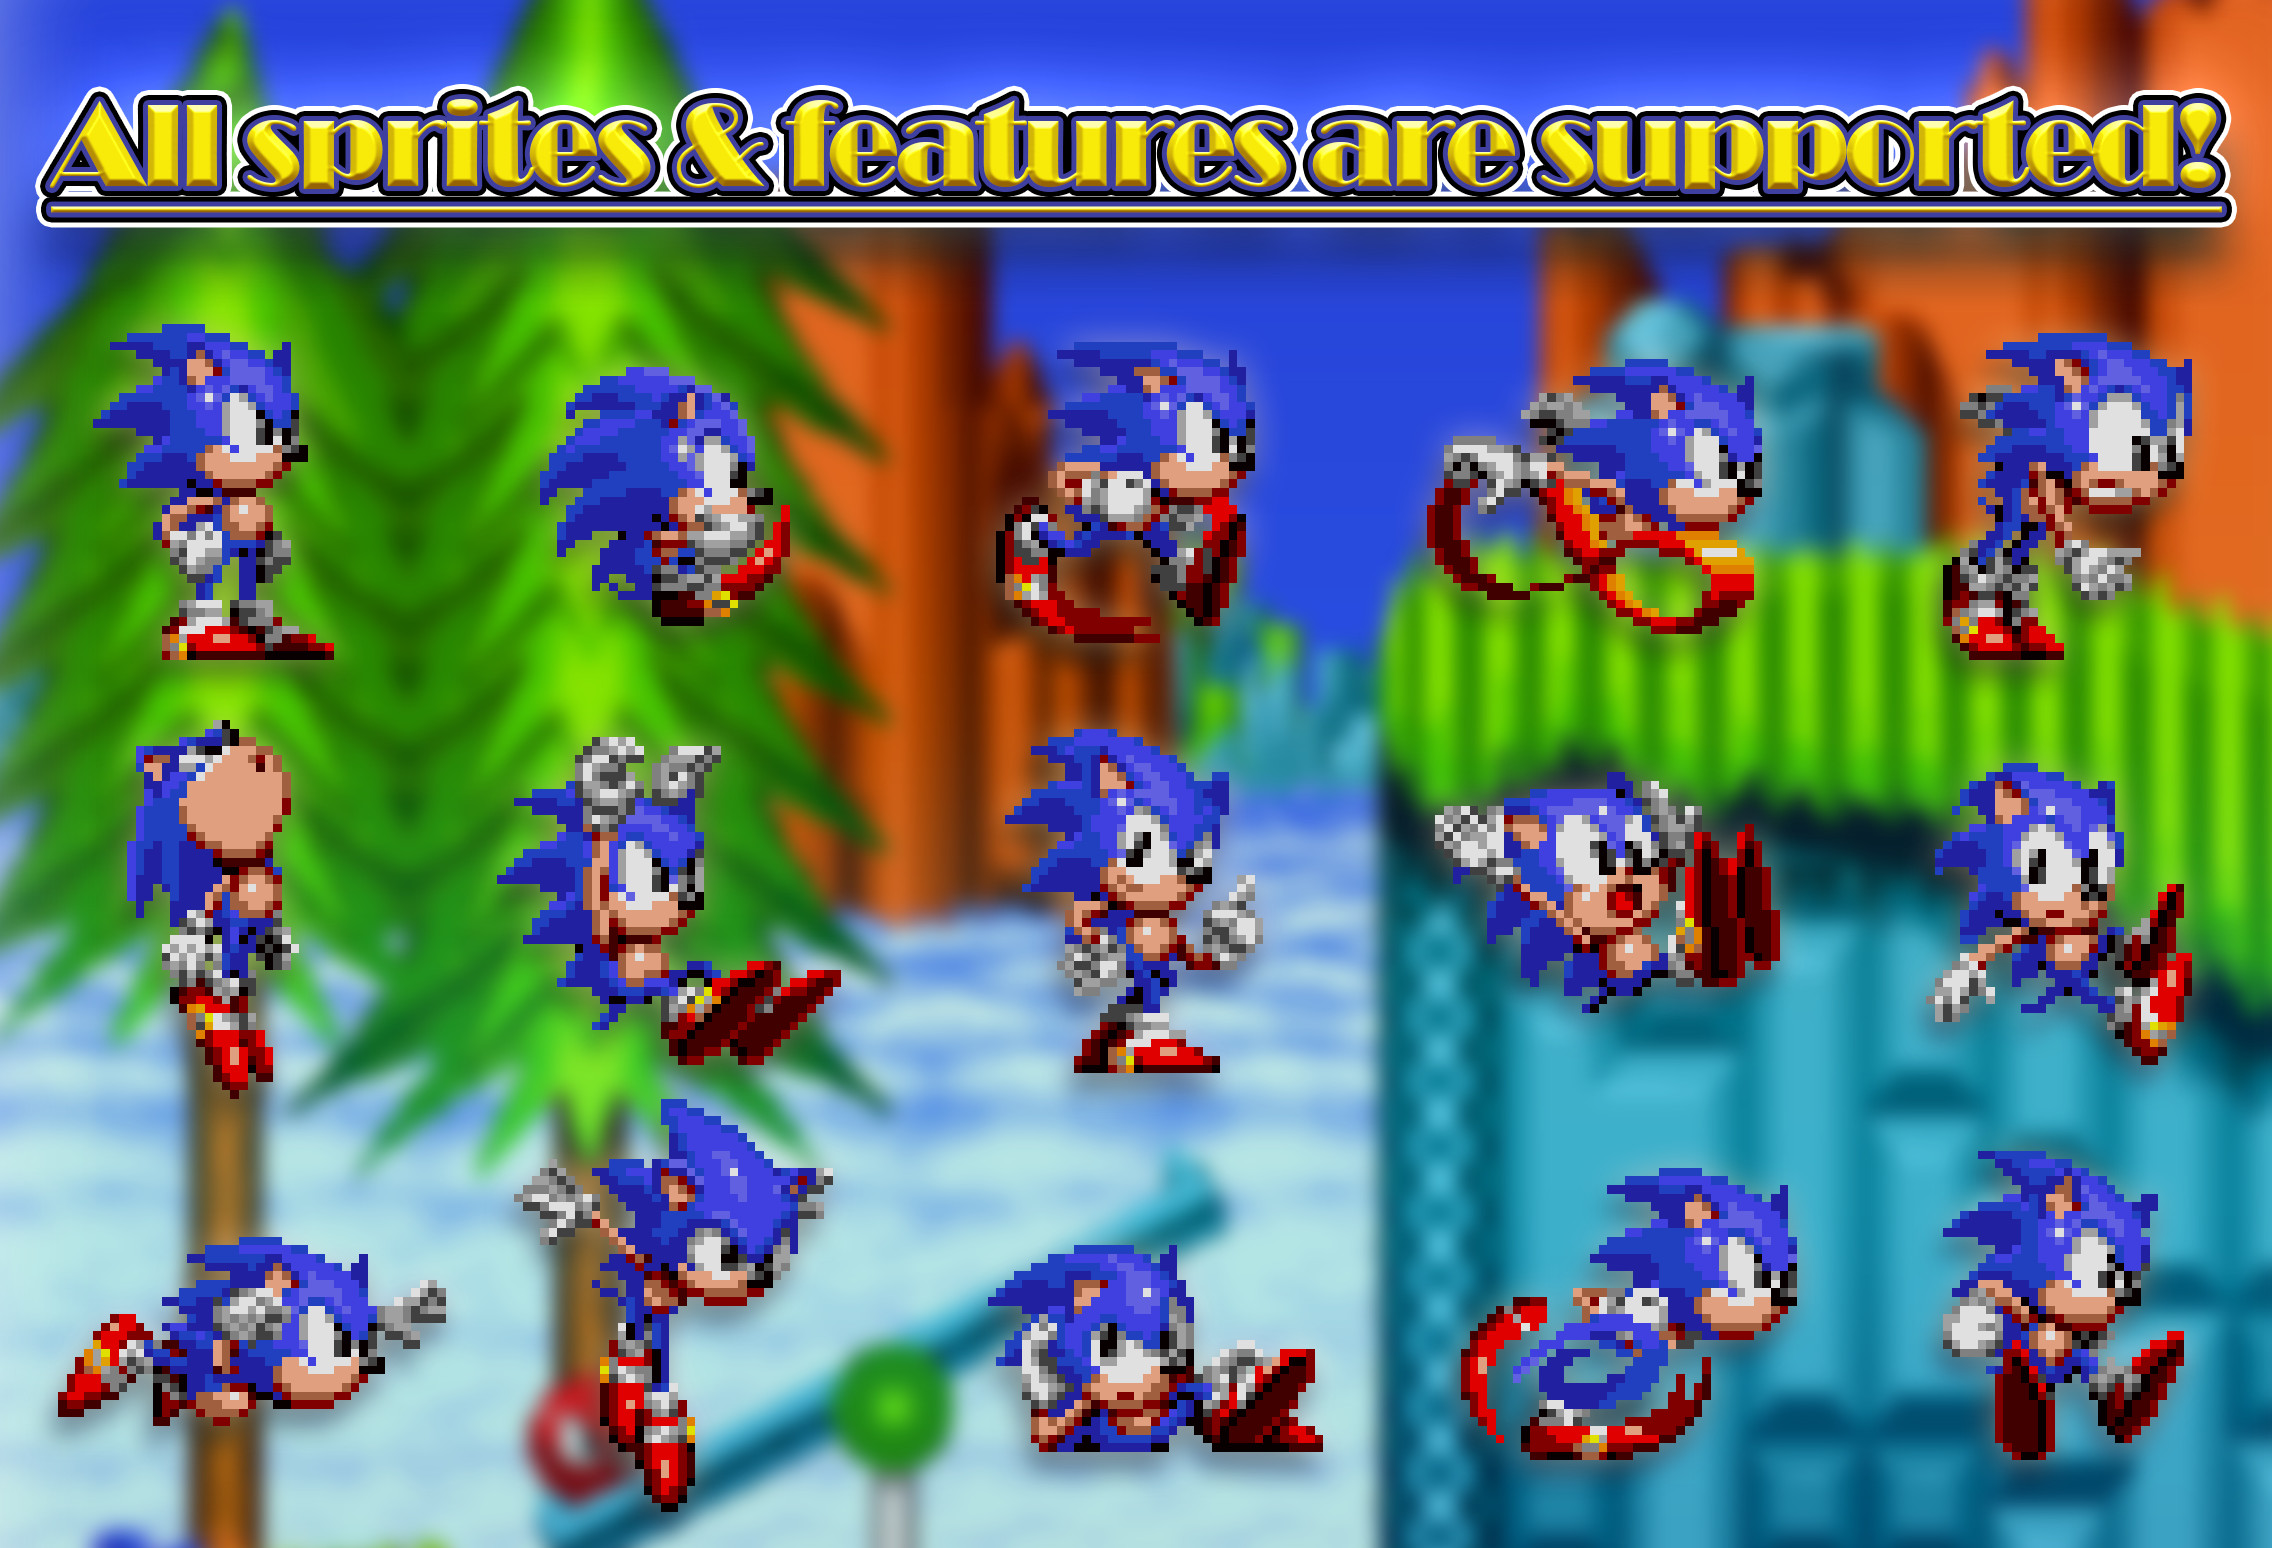 Modernized Super Sonic [Sonic The Hedgehog 2 Absolute] [Mods]